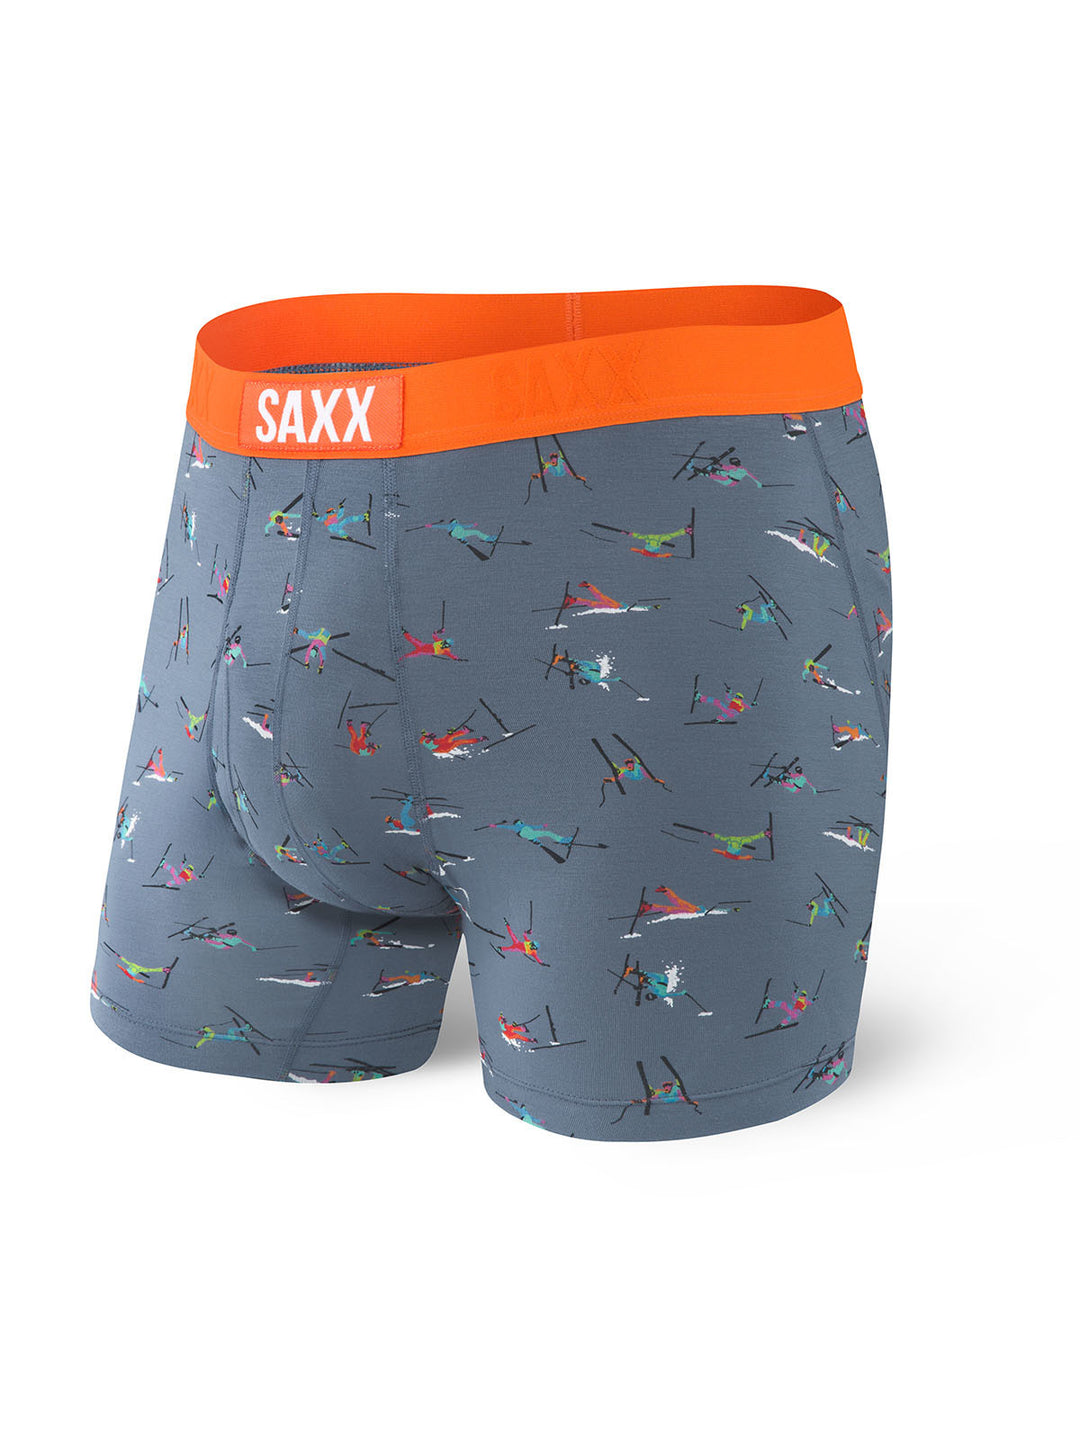 Saxx Ultra Boxer - Blue Totally Gnar - Size Small